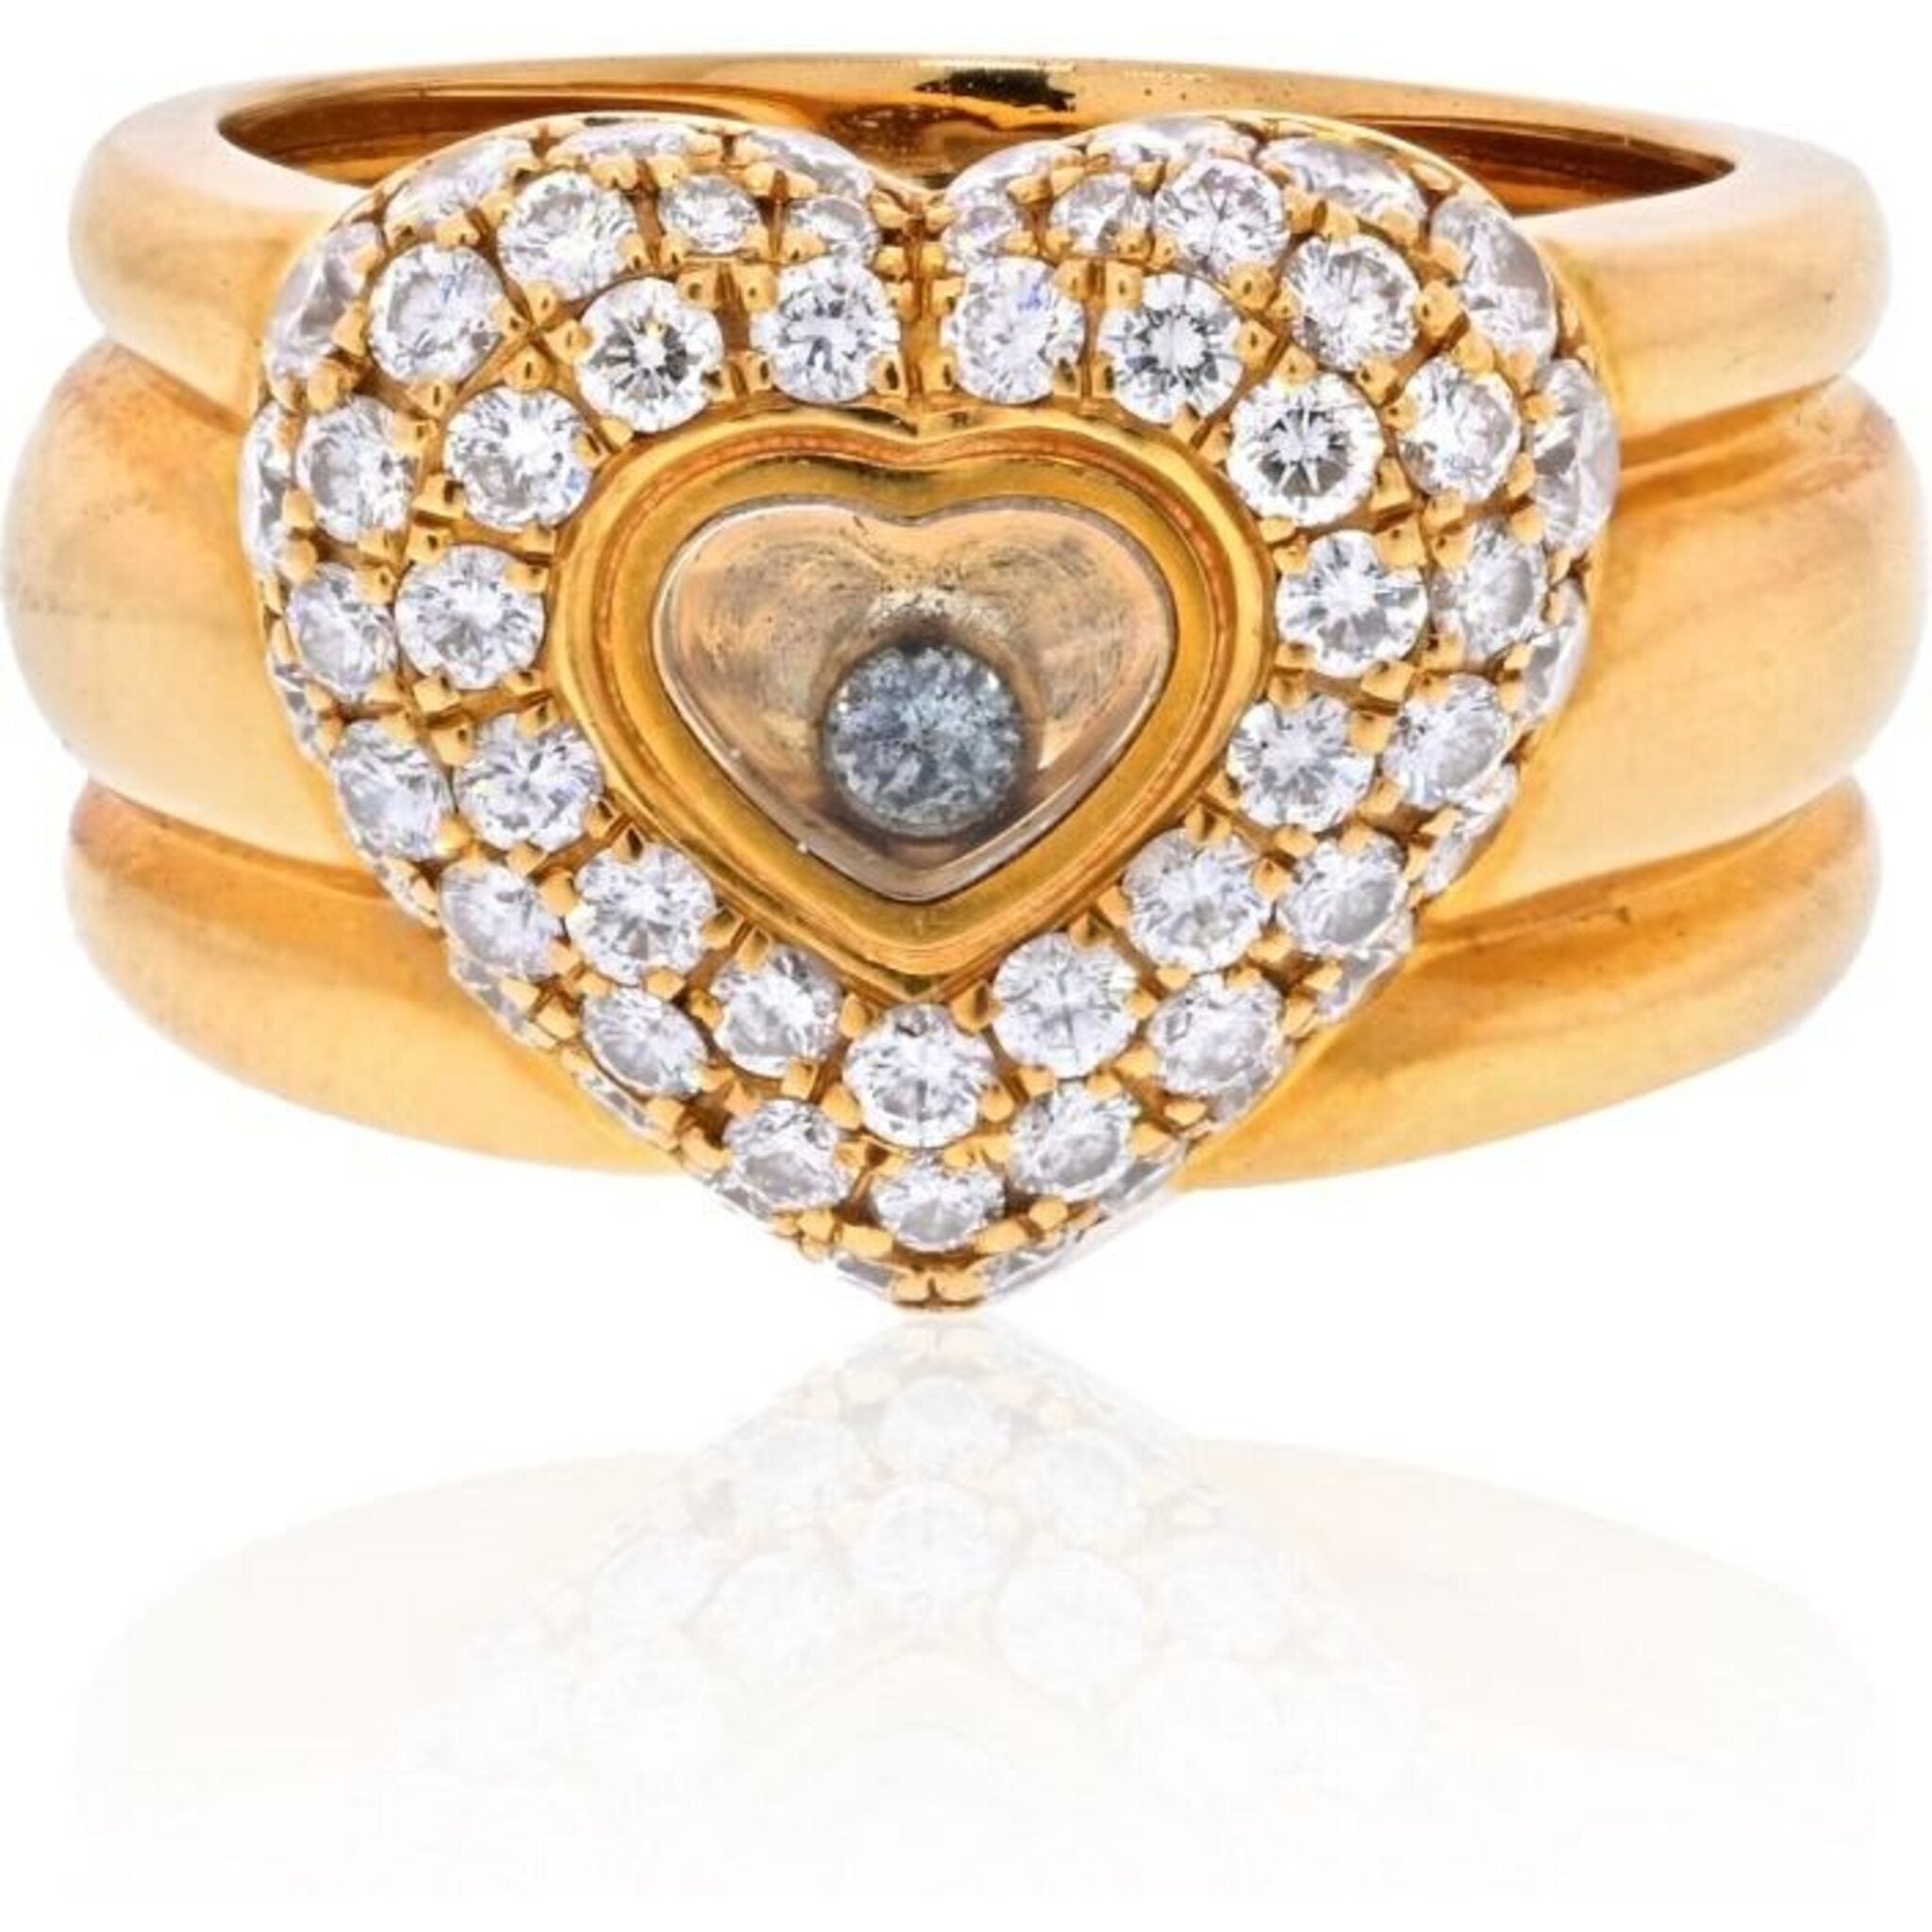 Style of Heart Diamond Ring